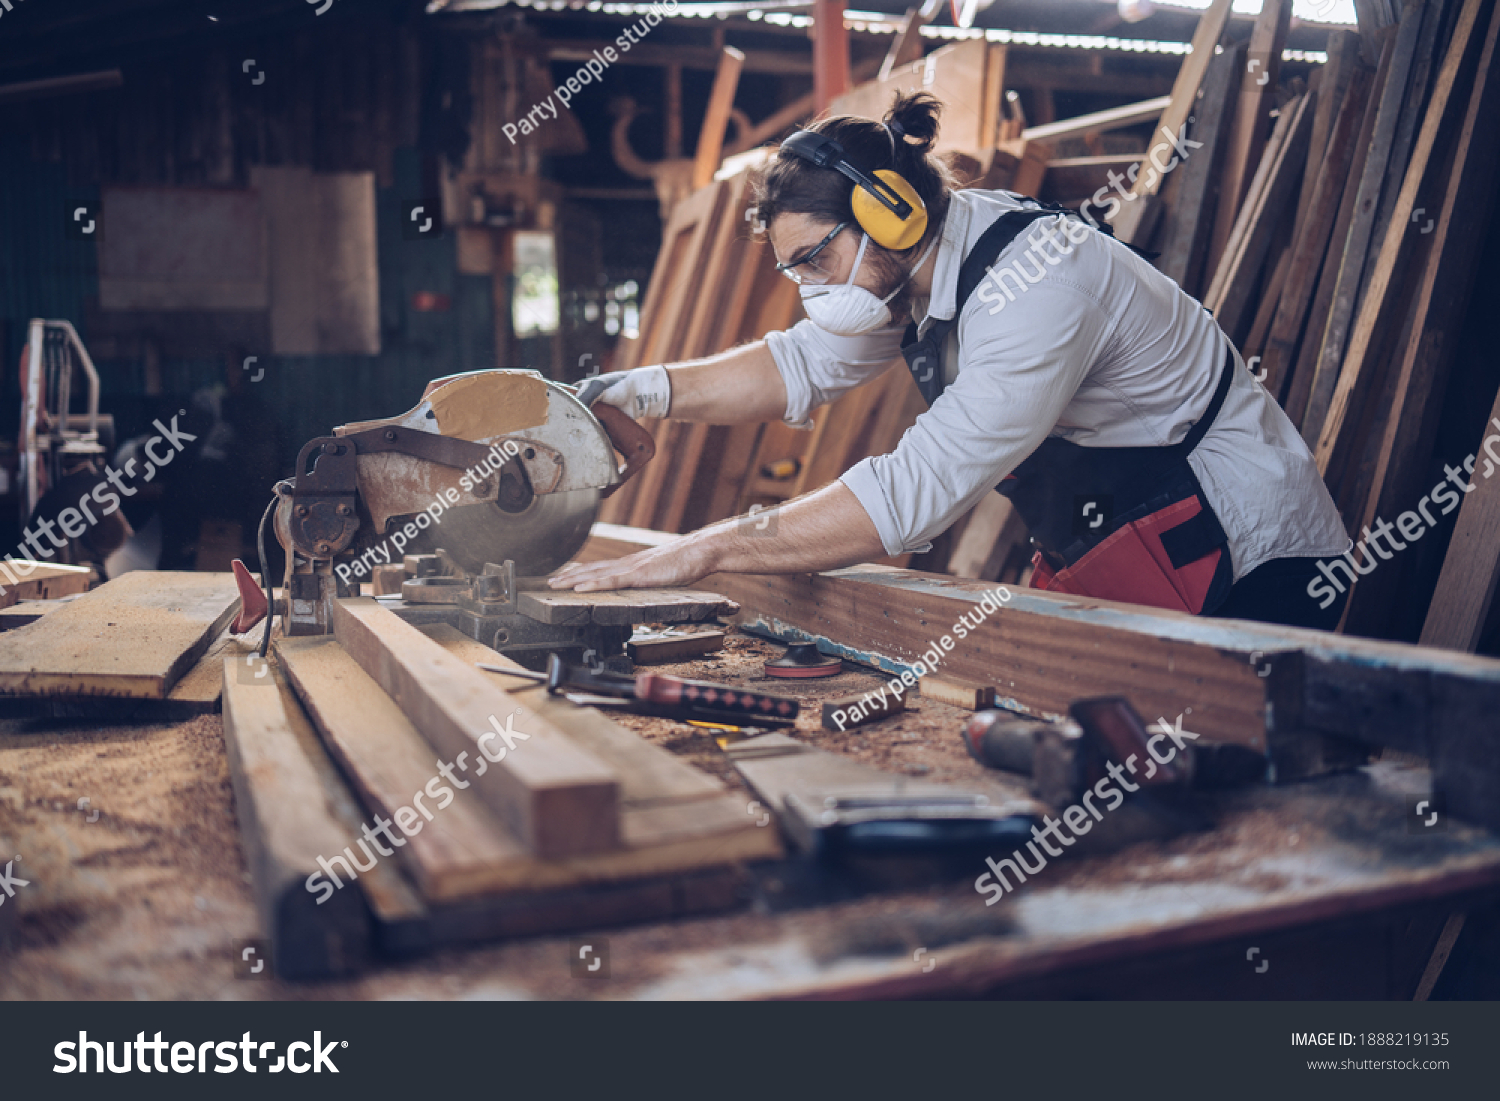 Woodworking carpenter furniture hand cuting.Man factory industry manufacturer, working workshop, maker construction. Skills artisan workshop factory. #1888219135